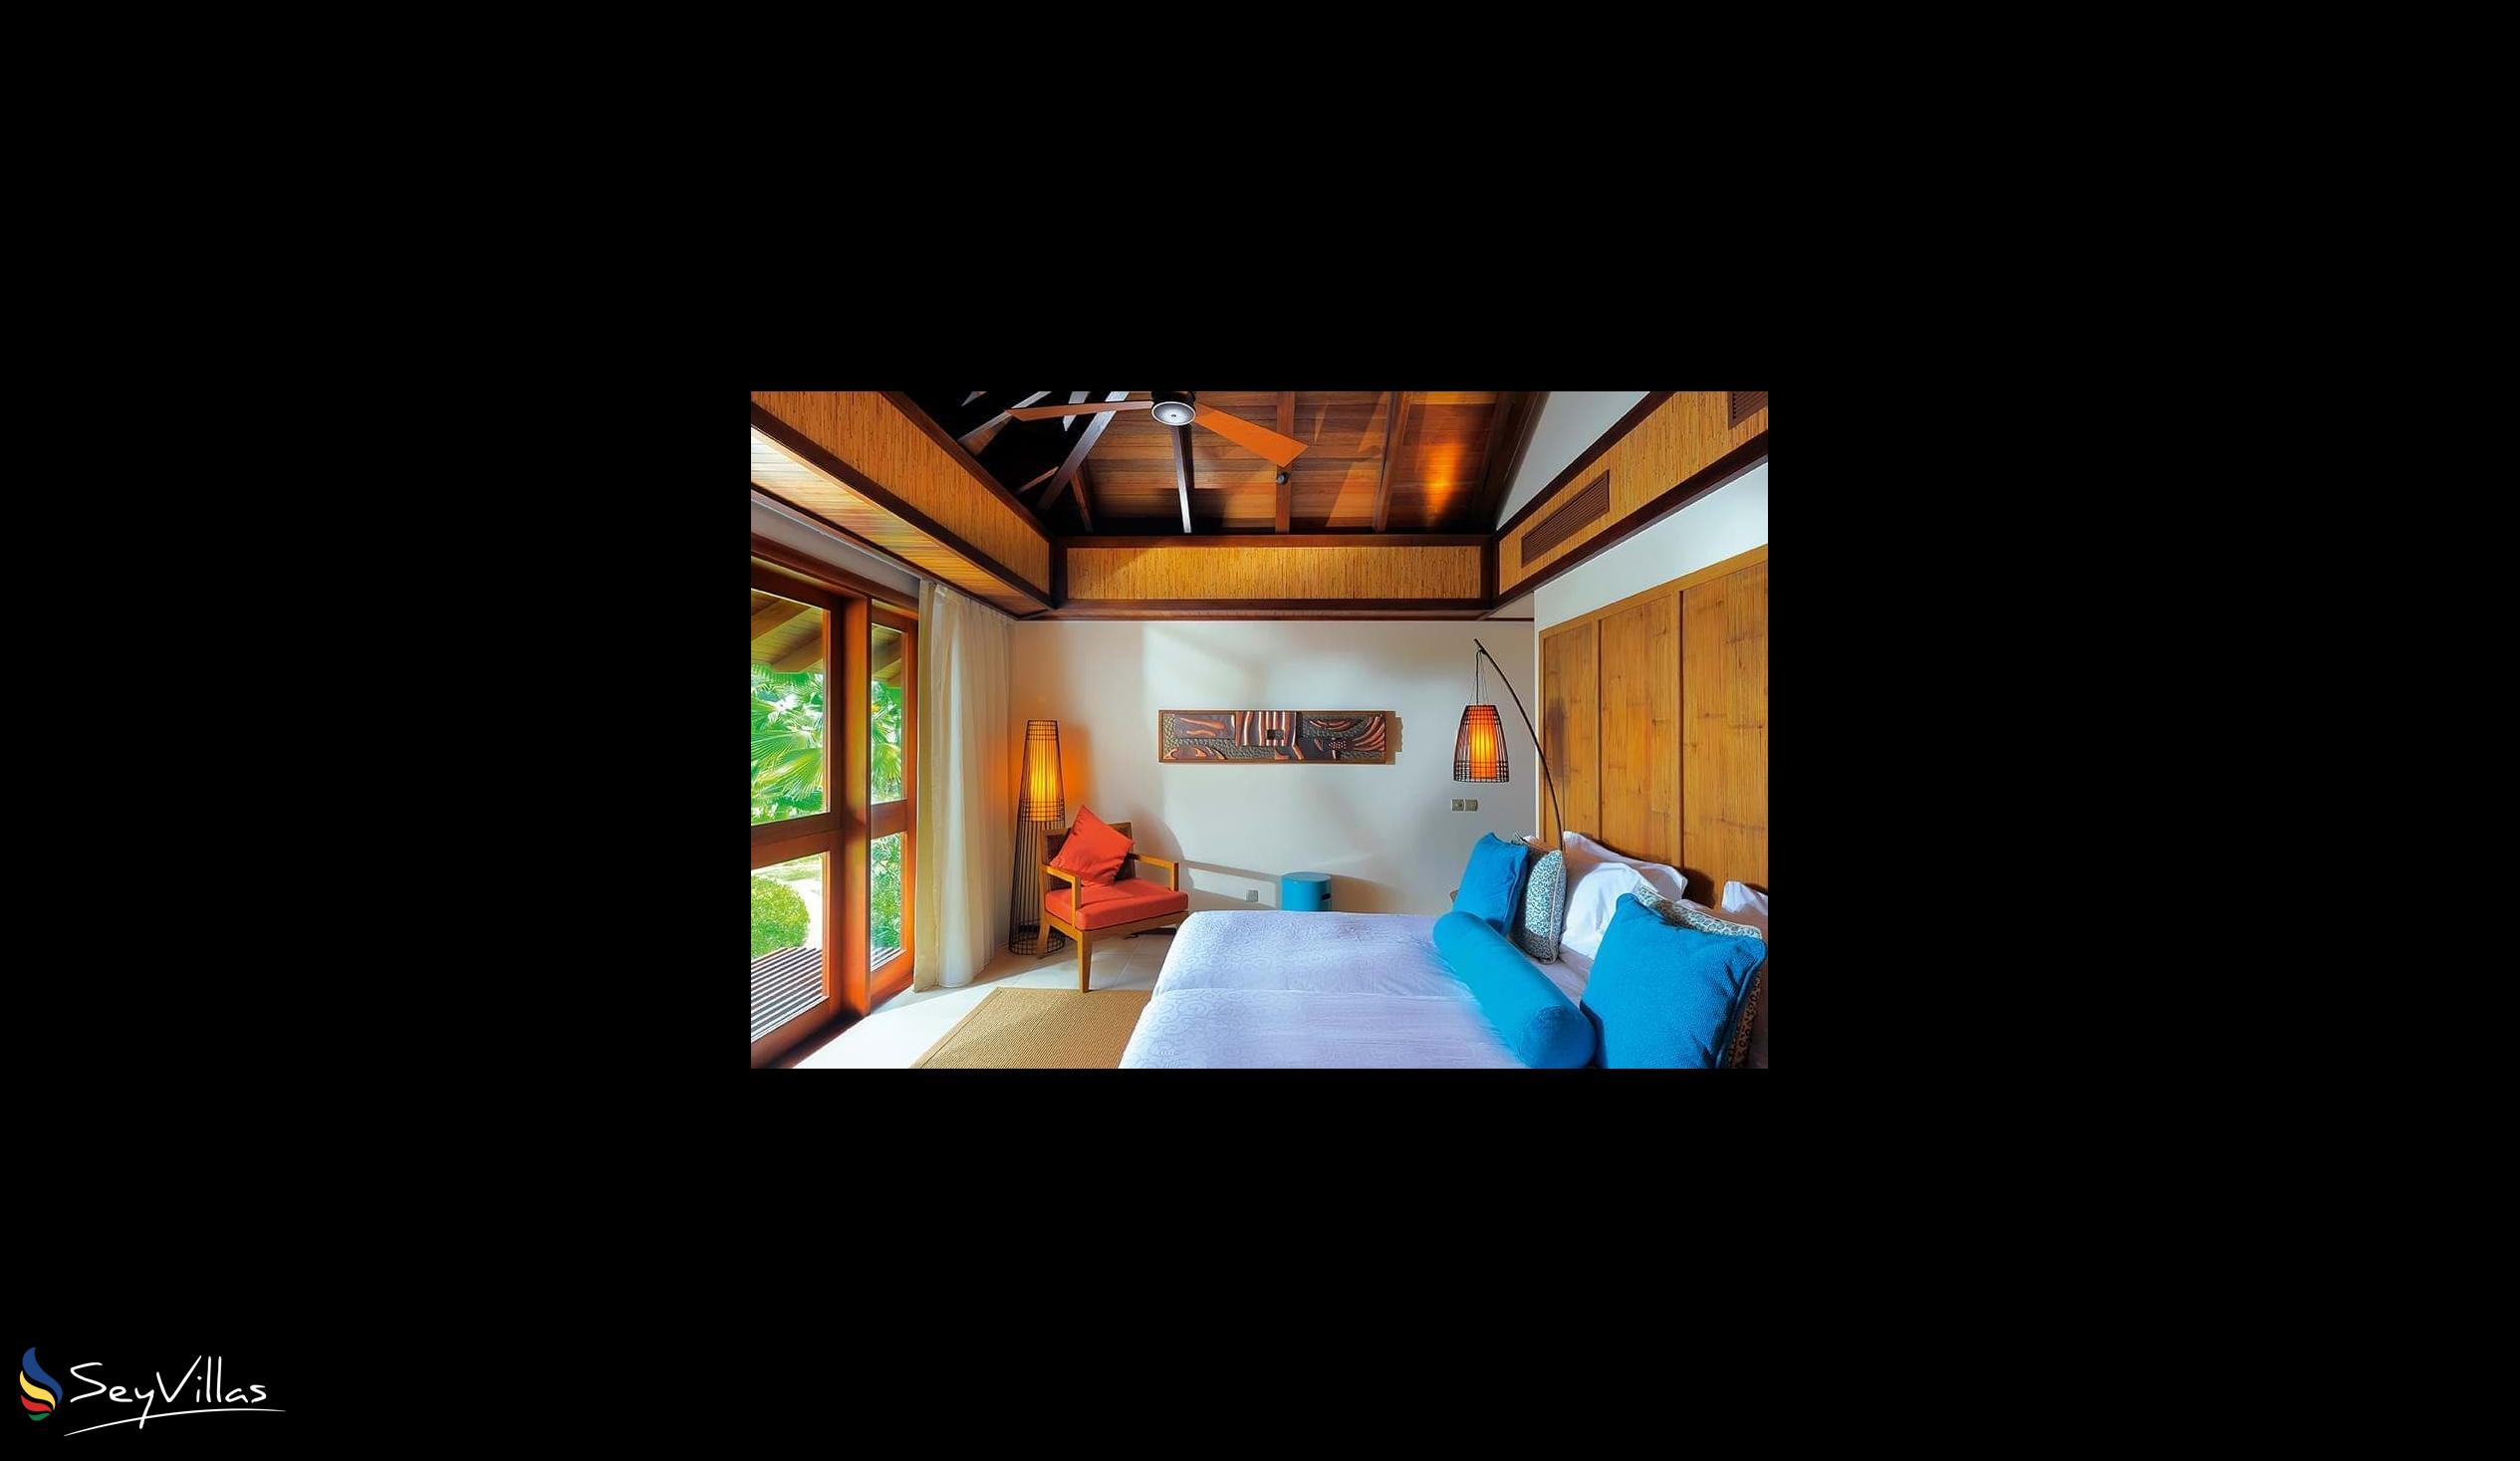 Photo 18: Constance Ephelia Seychelles - 2-Bedroom Family Villa - Mahé (Seychelles)